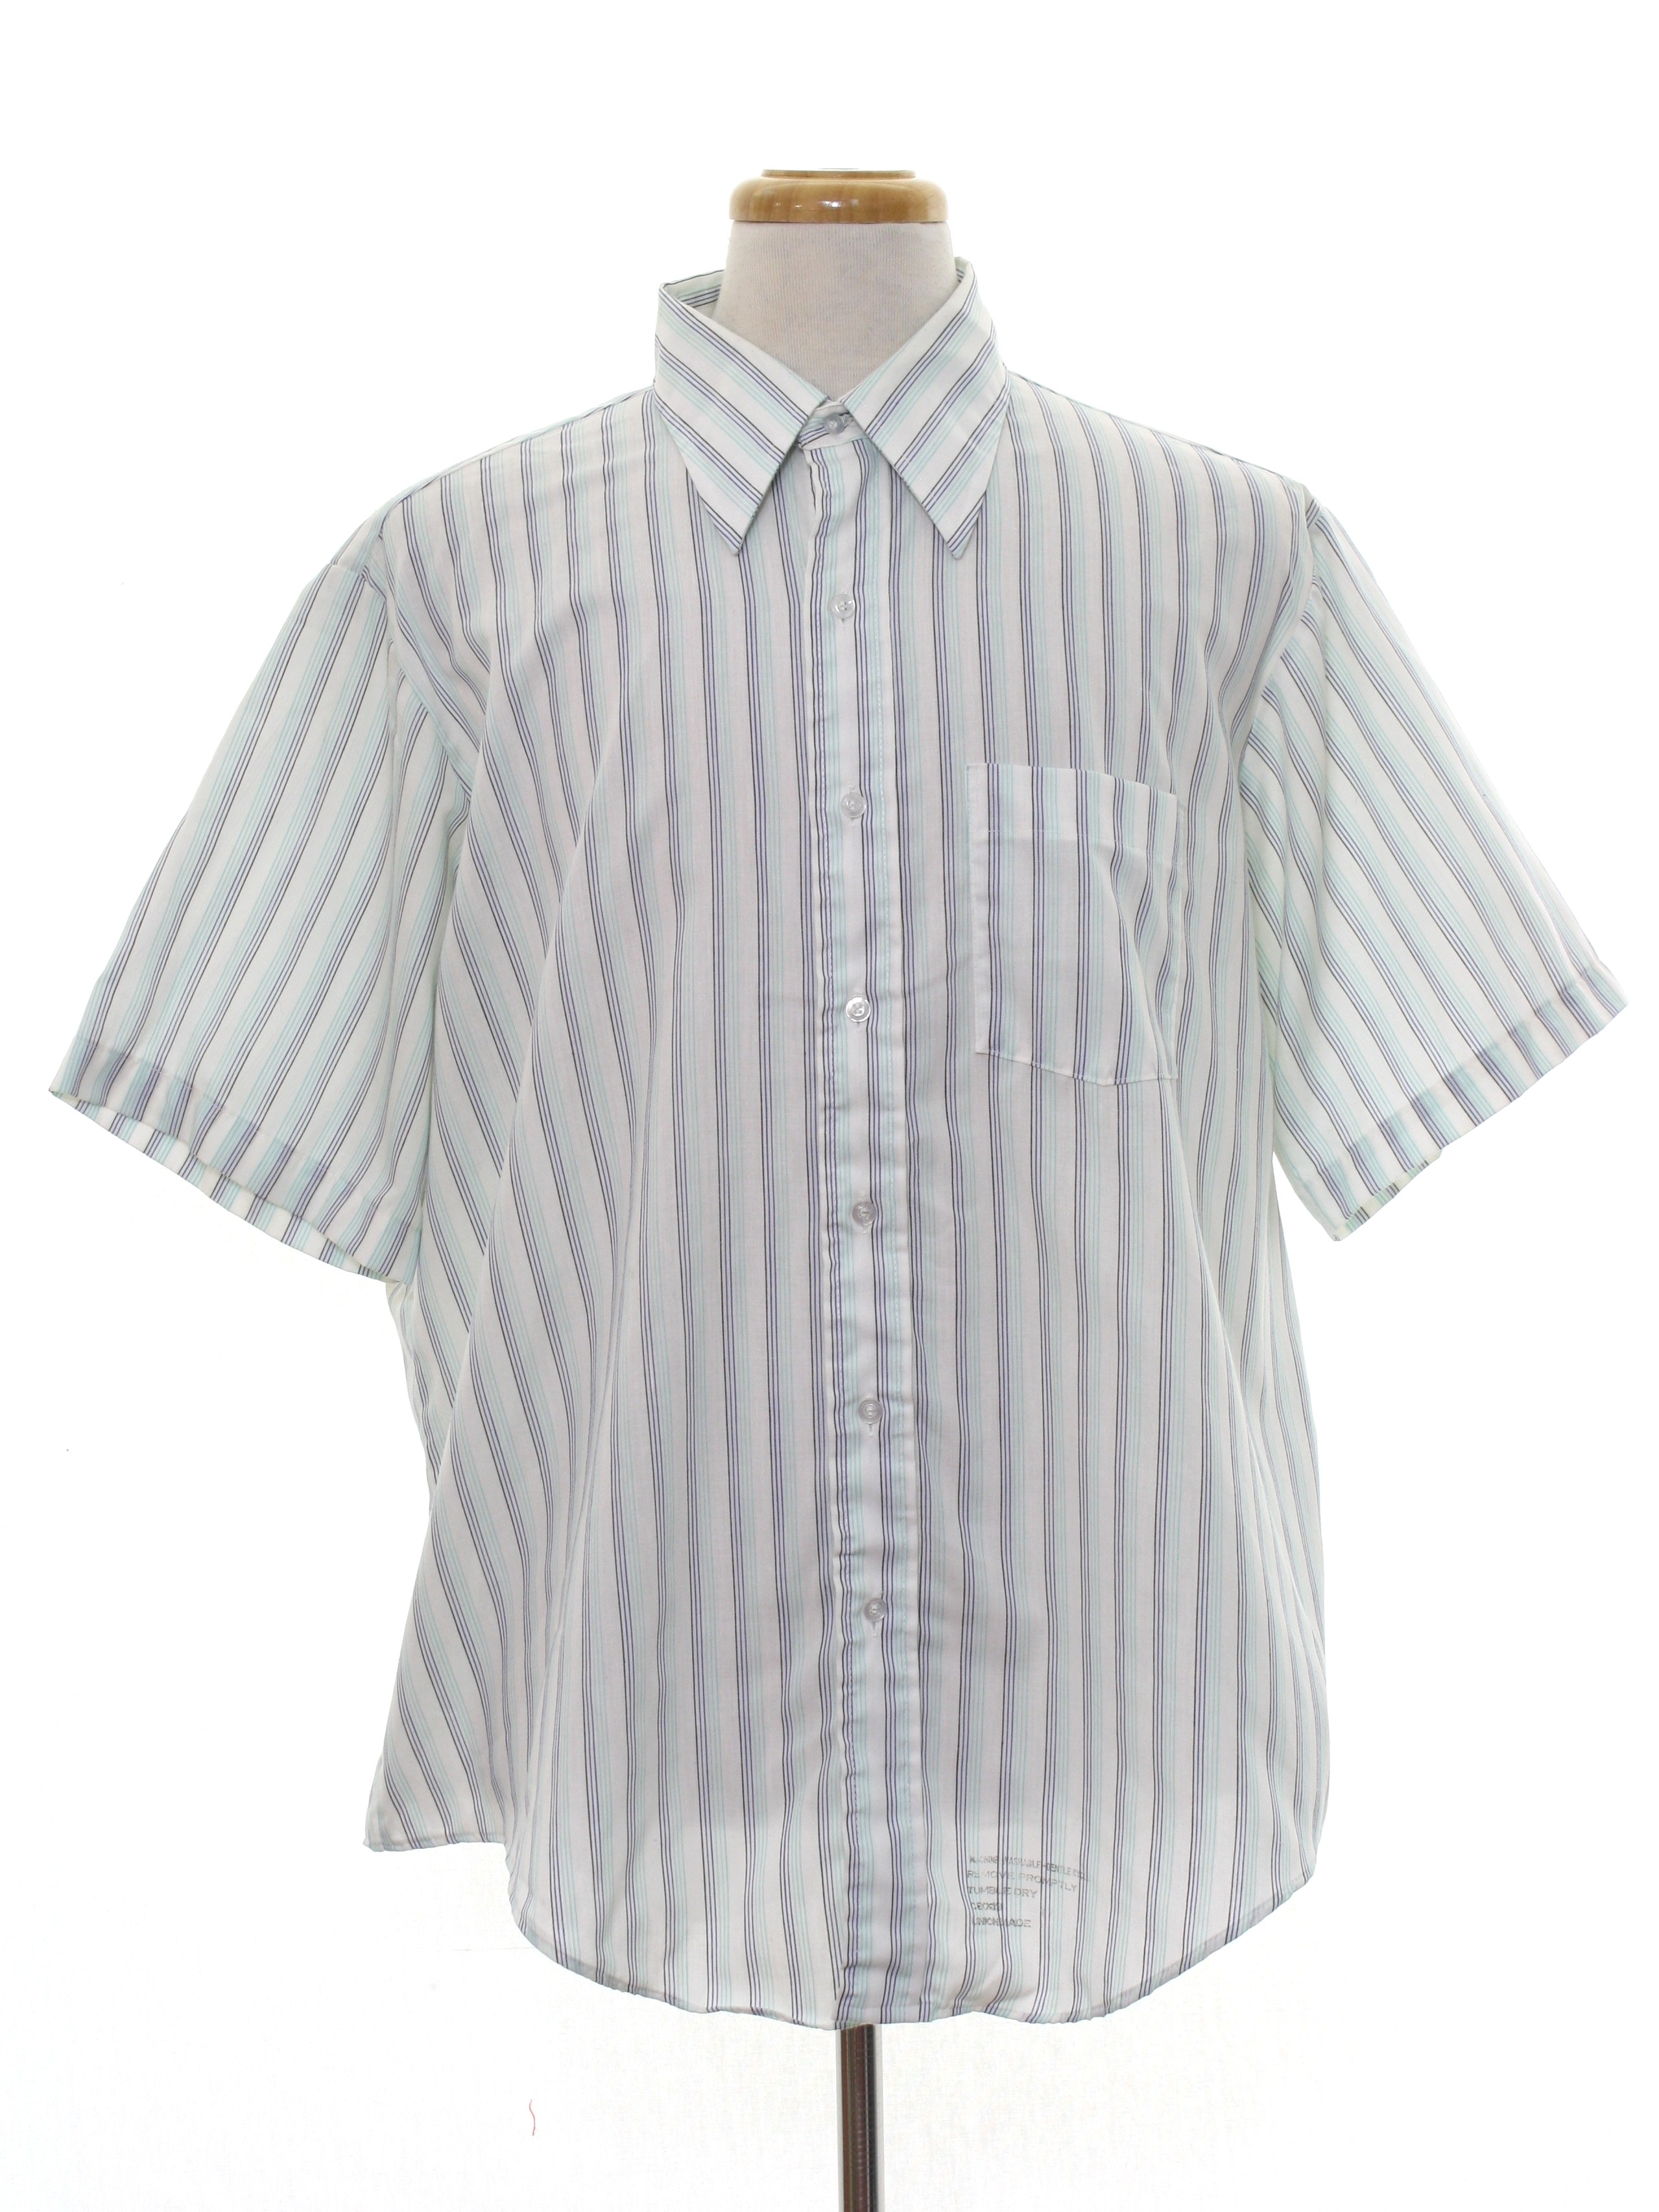 Vintage 1980's Shirt: 80s -Arrow Kent Collection- Mens white pinstripe